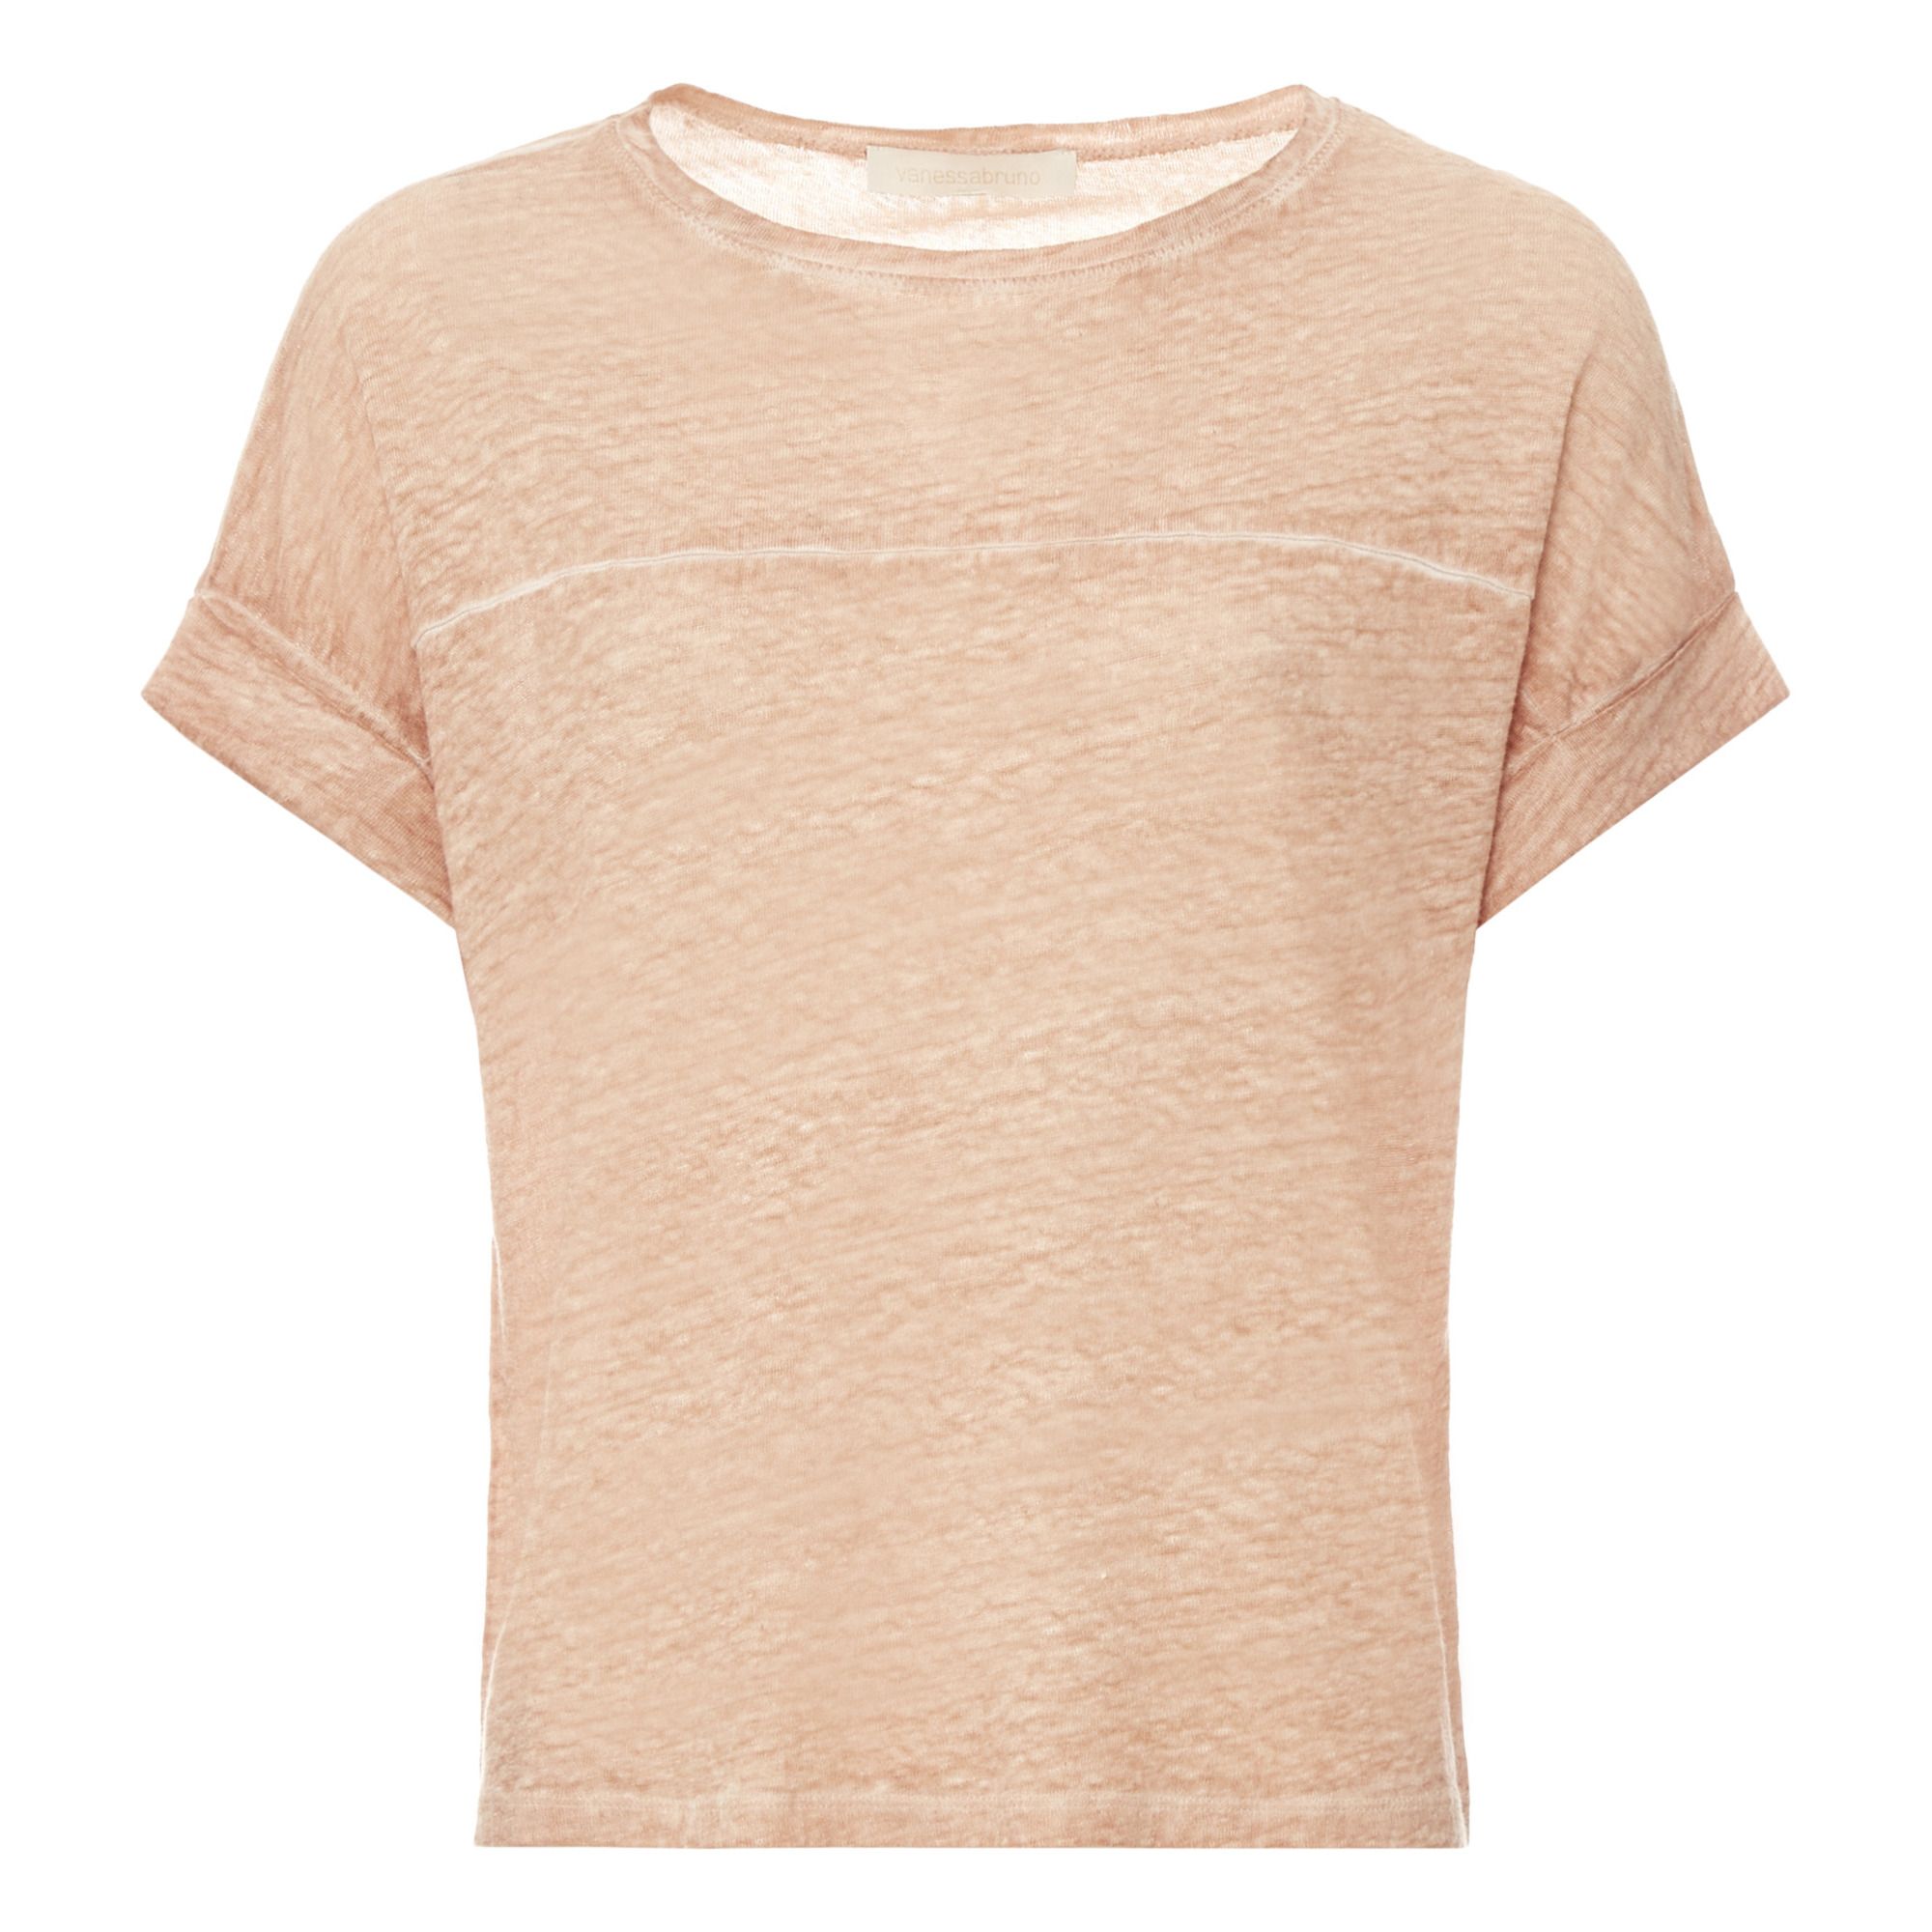 Vanessa Bruno - T-shirt Nelda Lin - Femme - Beige rosé